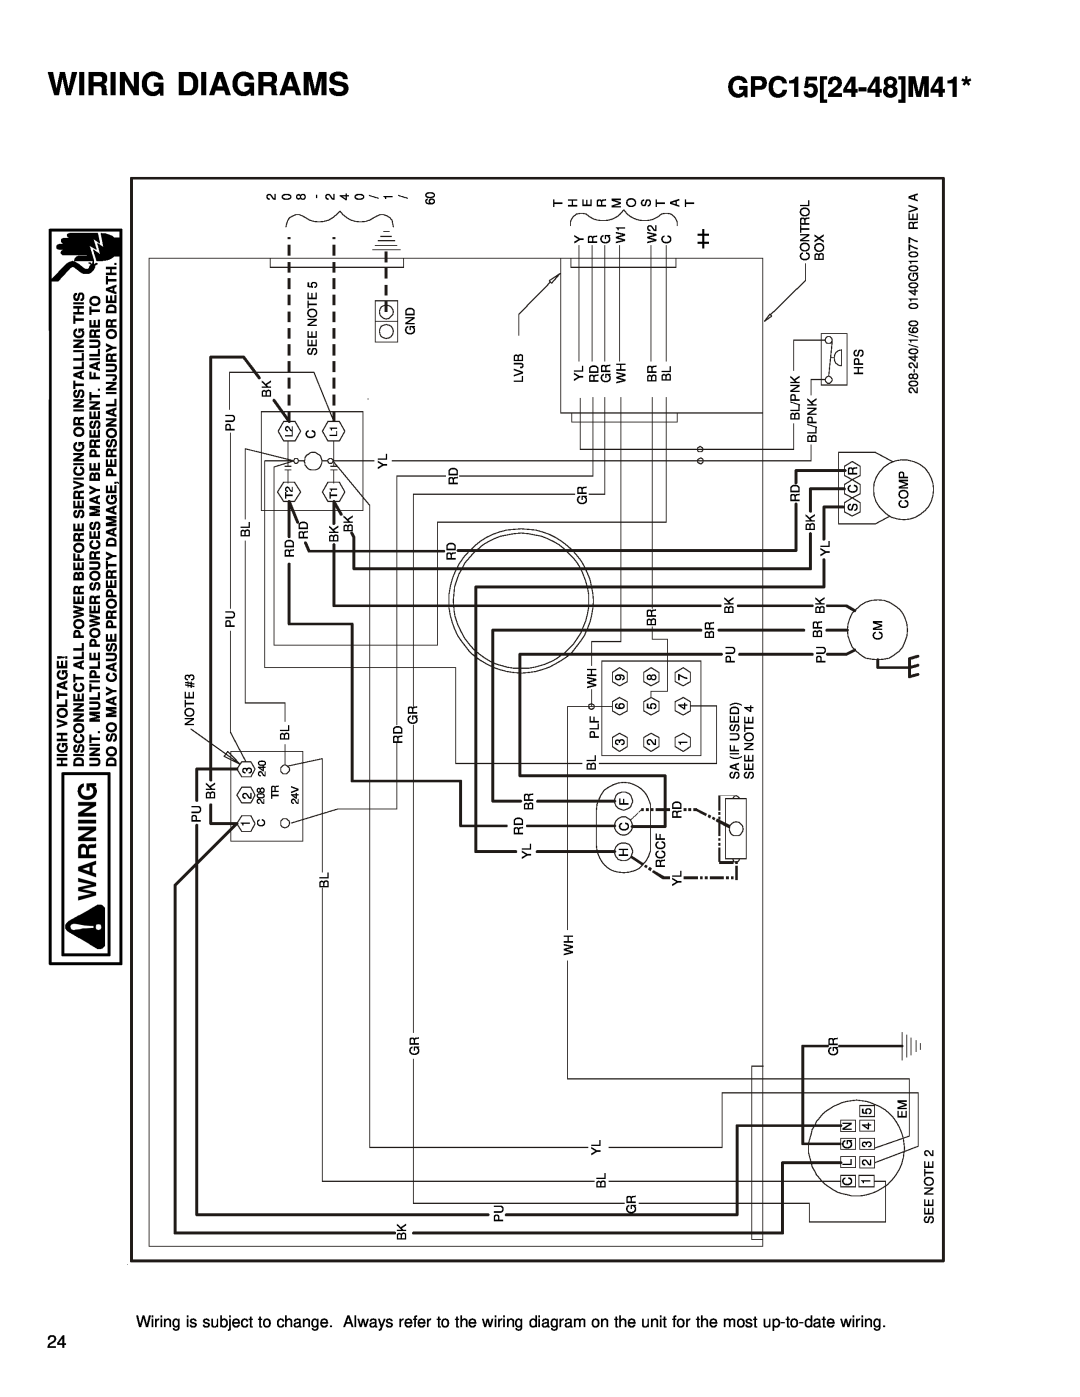 Goodman Mfg GPC15 SEER service manual GPC1524-48M41, Wiring Diagrams 